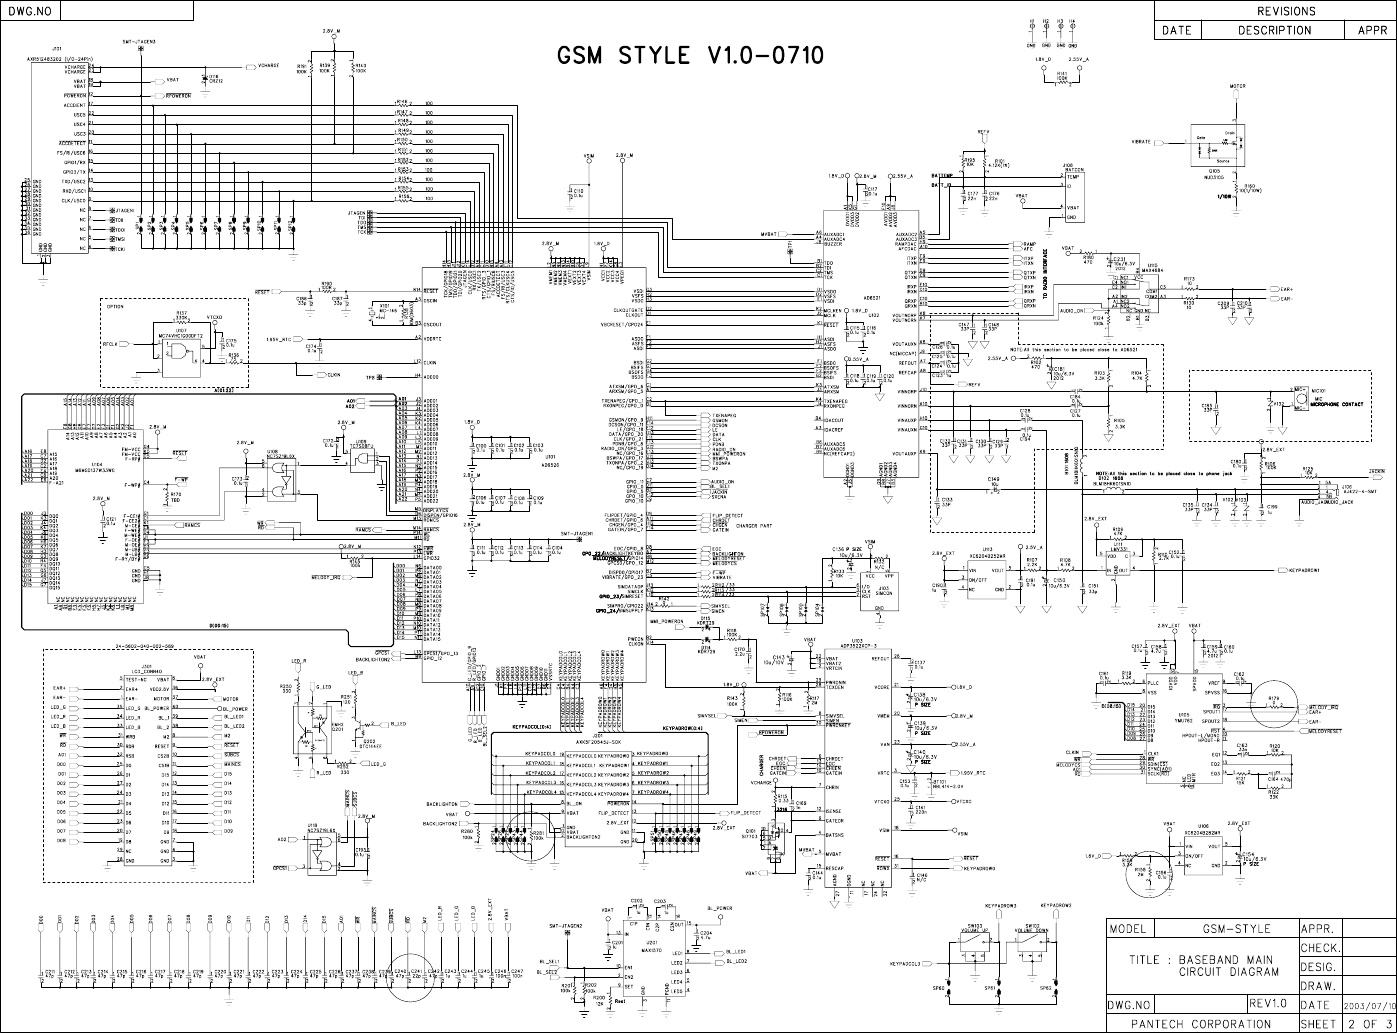 Page 1 of 7 - CAM Output Pantech G300 Schematics